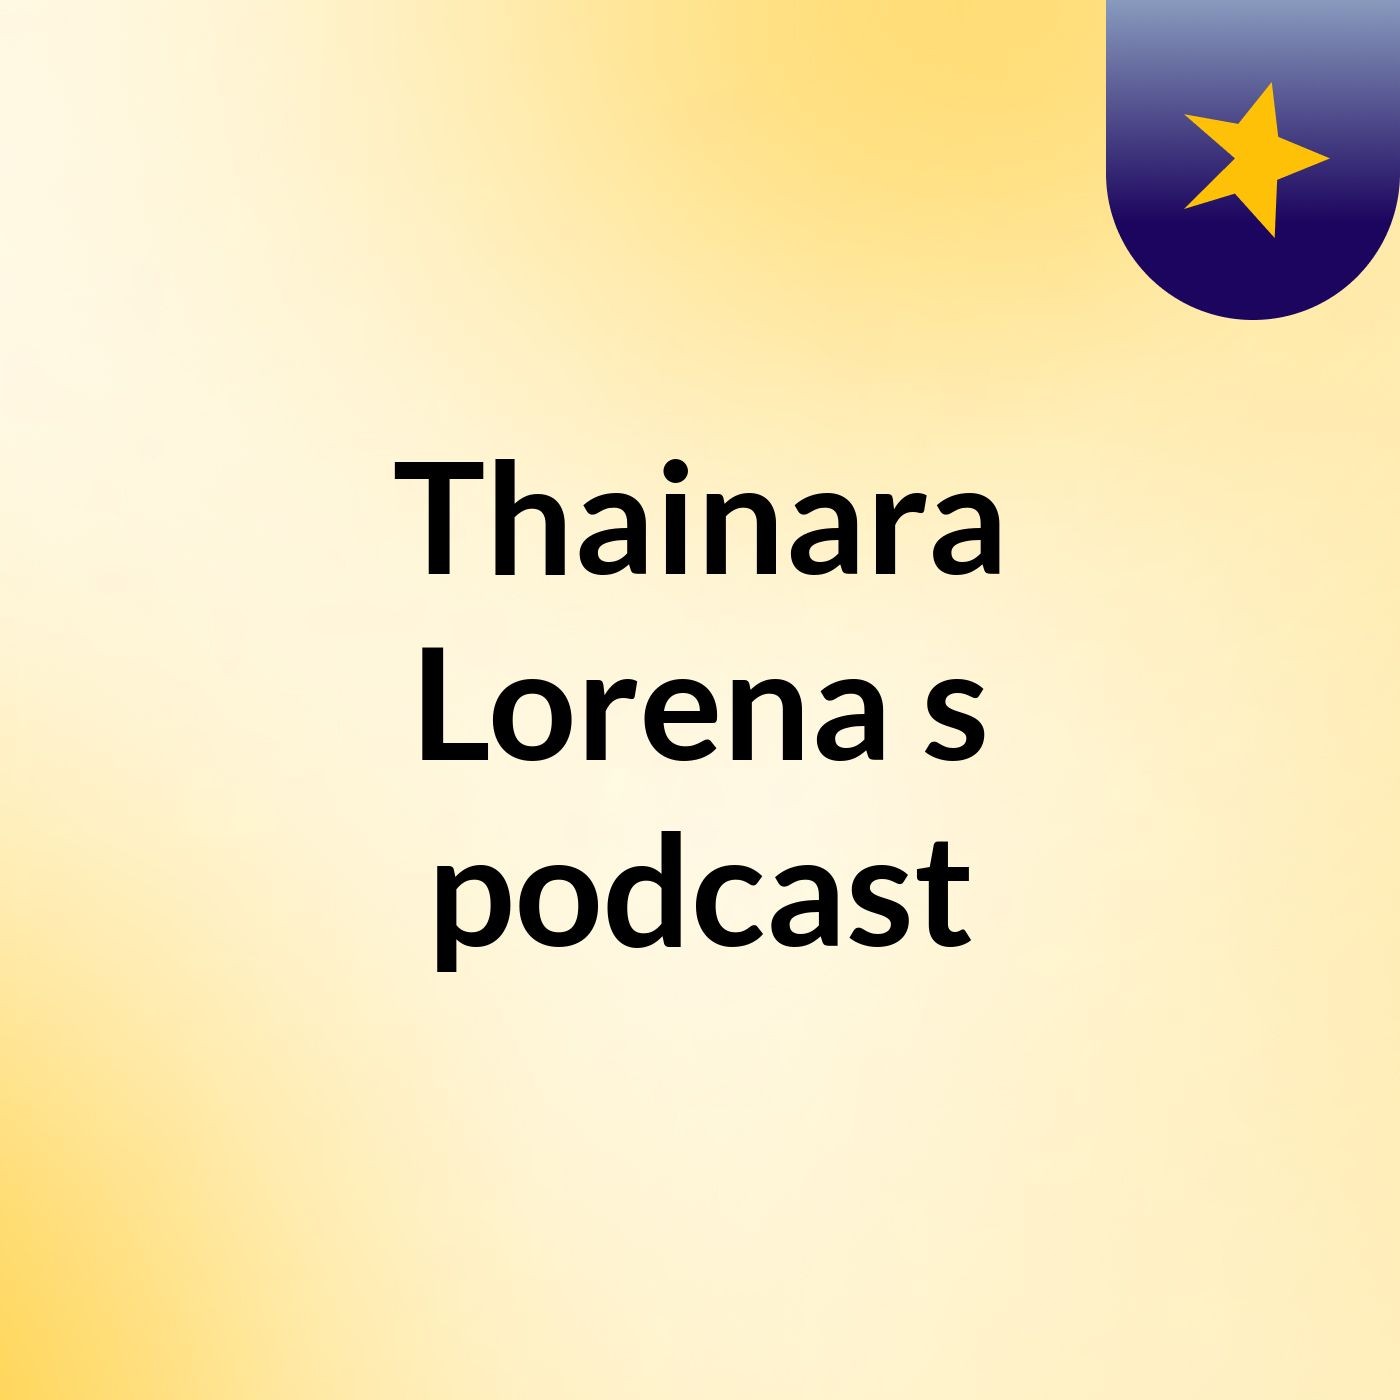 Thainara Lorena's podcast